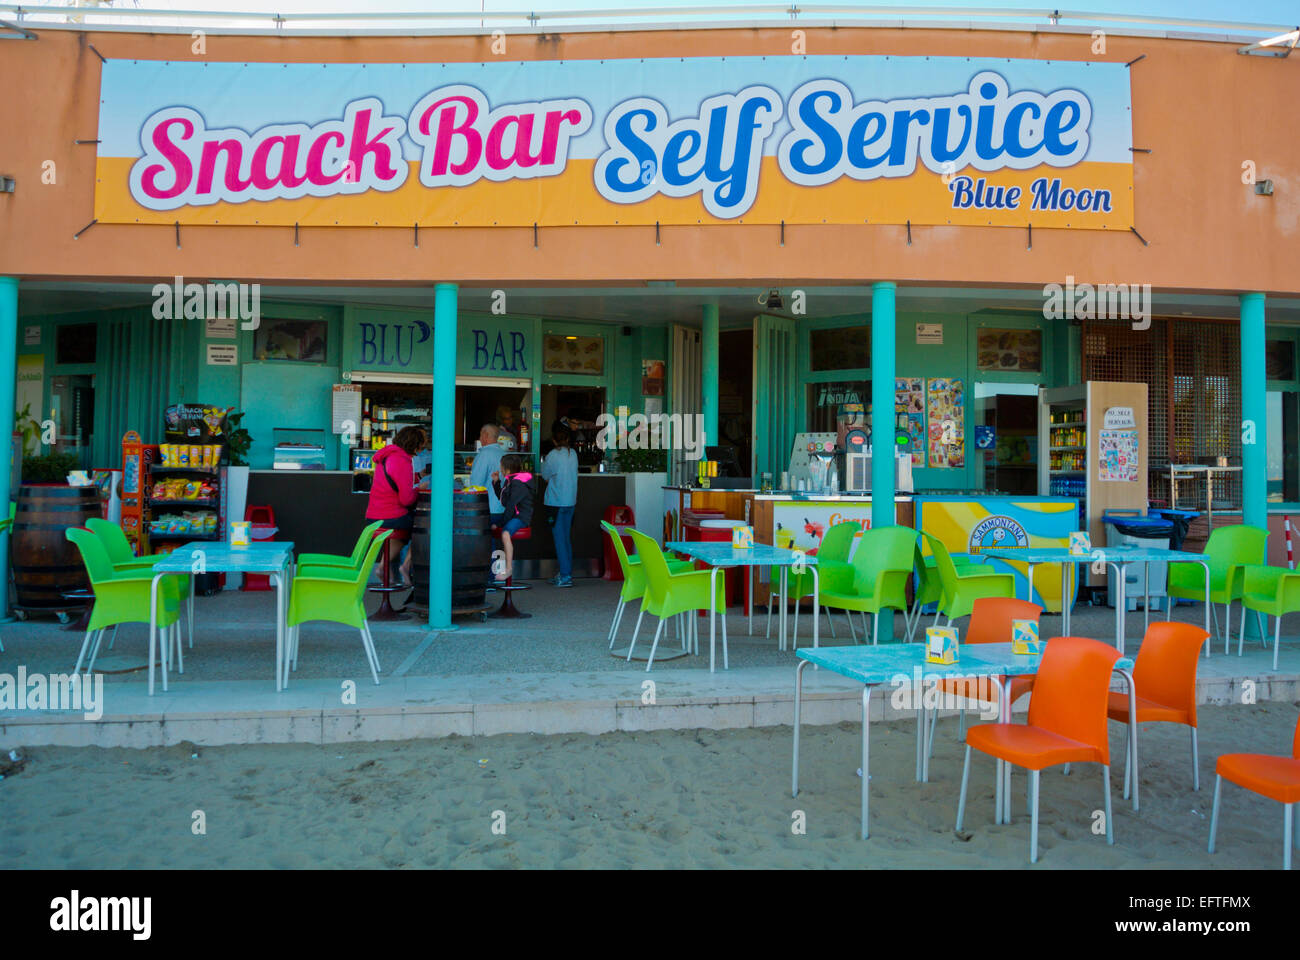 Restaurant self-service, snack-bar, Blue Moon beach, Lido, Venise, Italie Banque D'Images